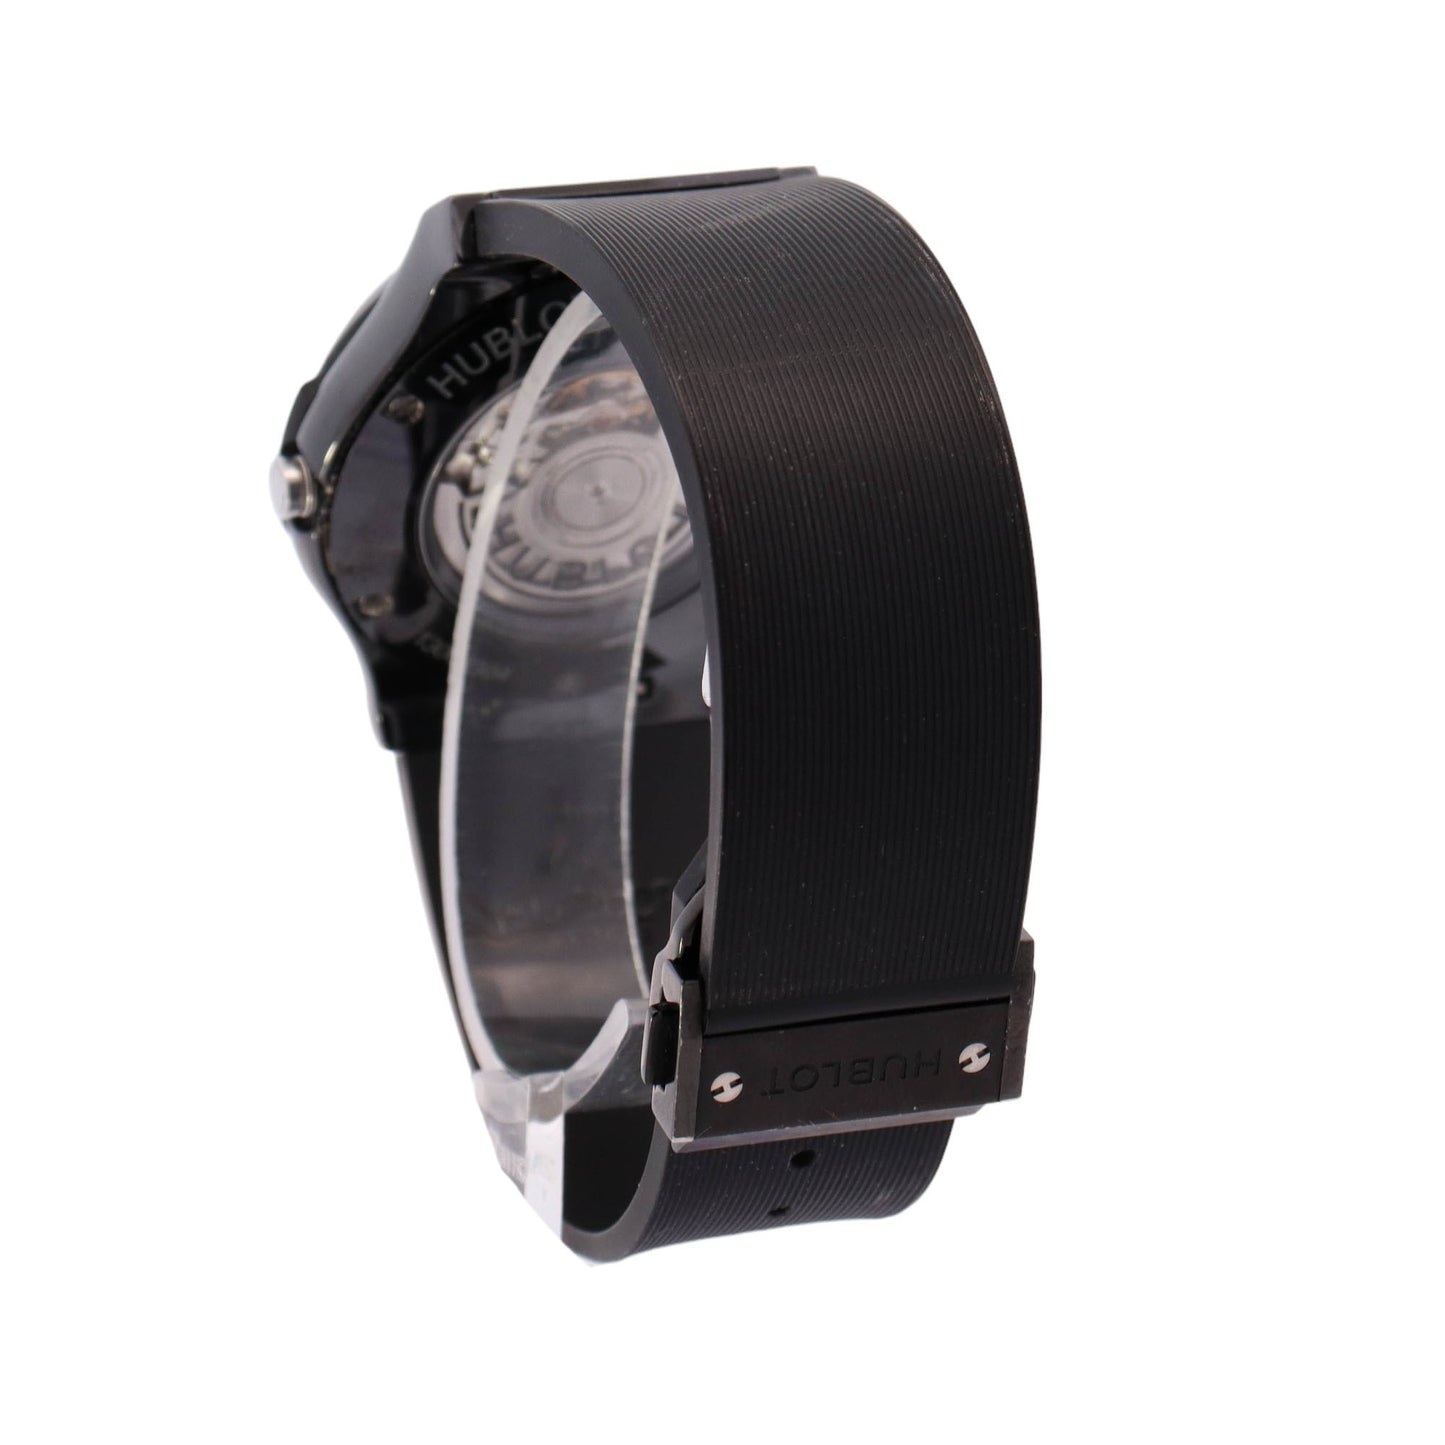 Hublot Classic Fusion 42mm Black Stick Dial Watch Reference# 542.CM.1771.LR - Happy Jewelers Fine Jewelry Lifetime Warranty